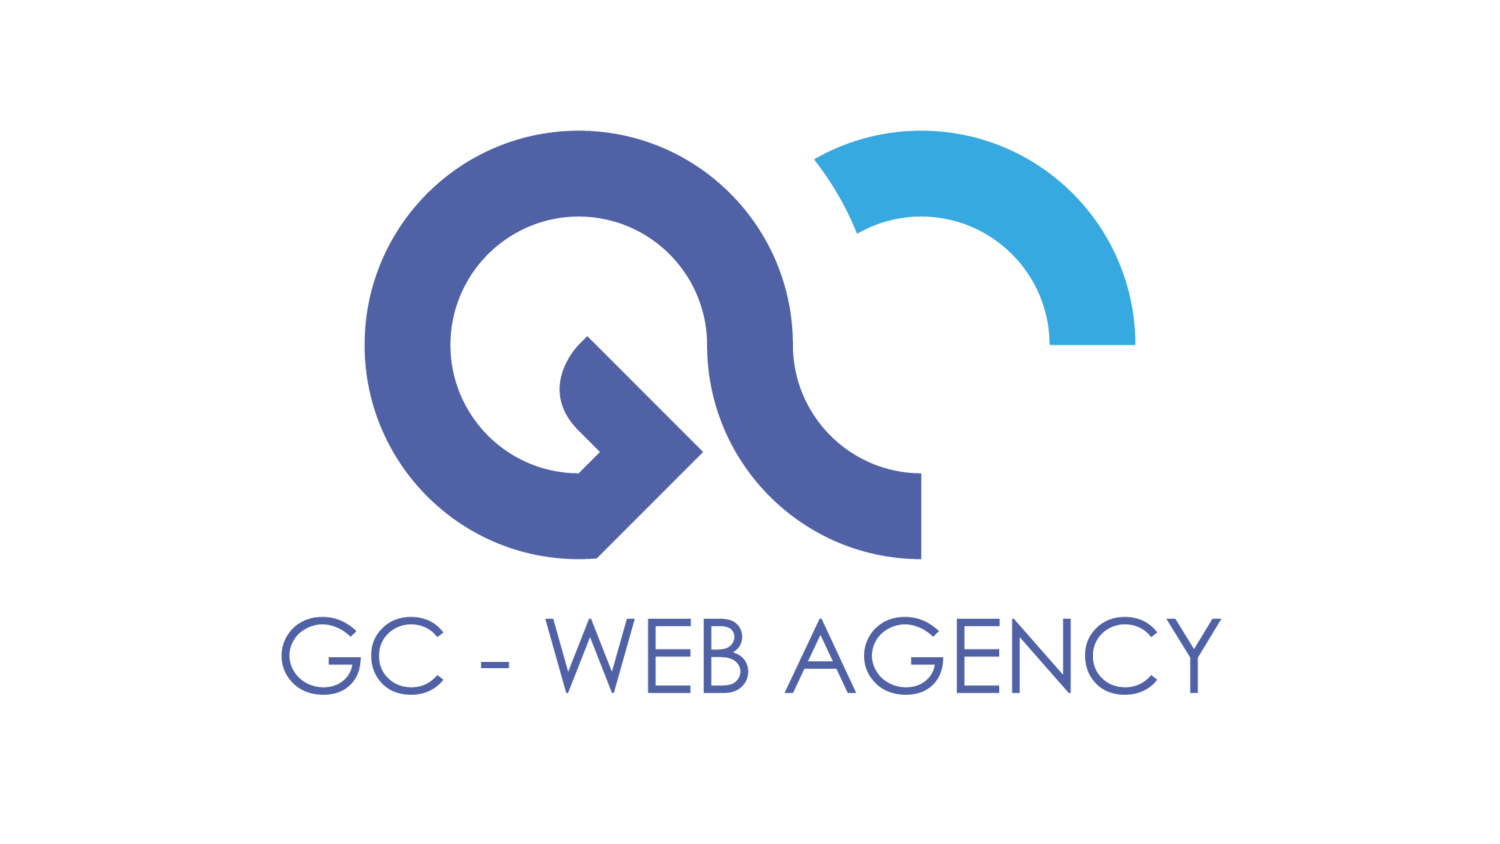 GC - Web Agency